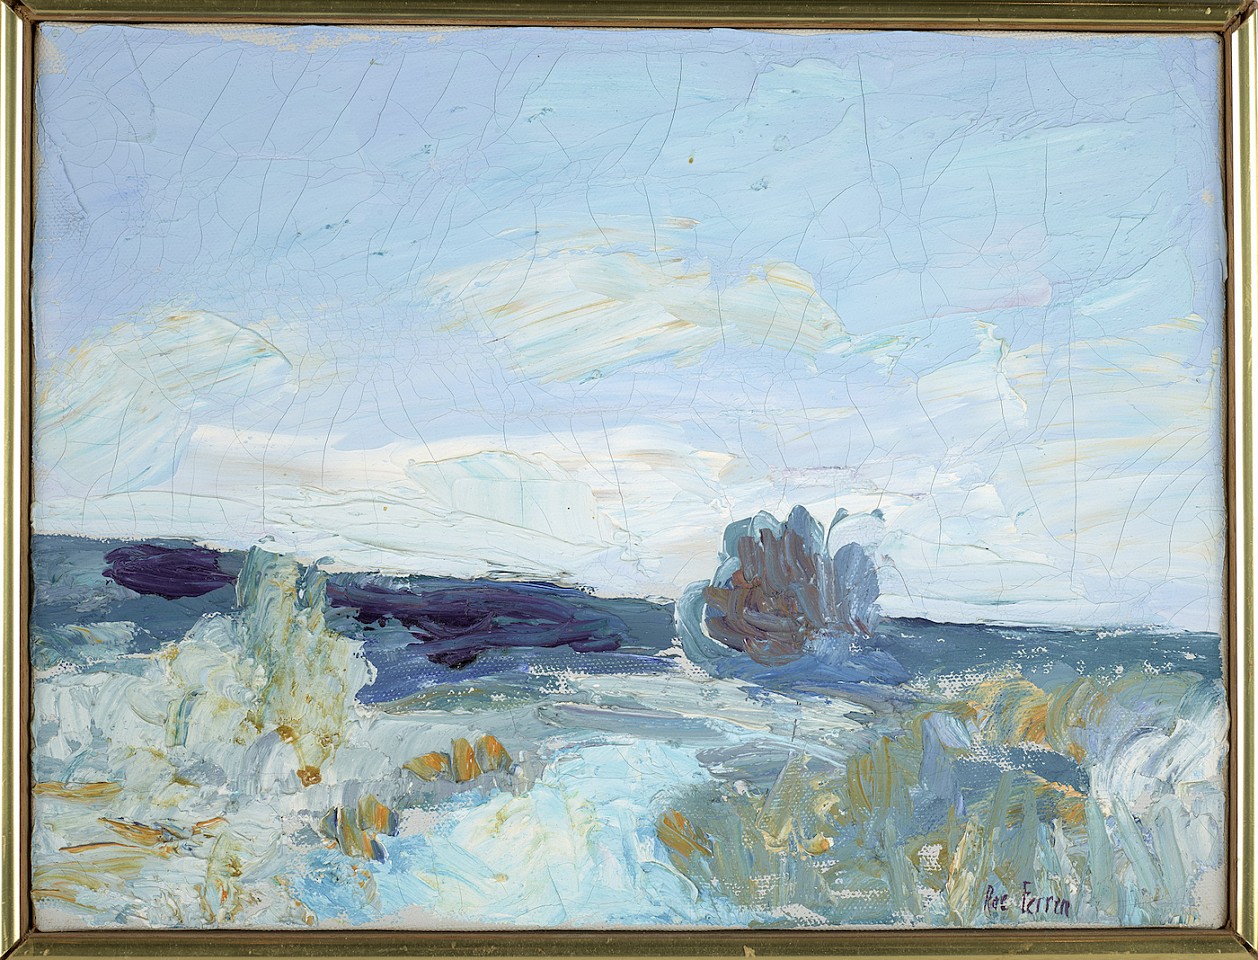 Rae Ferren, #16 The Marsh, 1979
Oil on canvas, 9 x 12 in. (22.9 x 30.5 cm)
RFER-00001